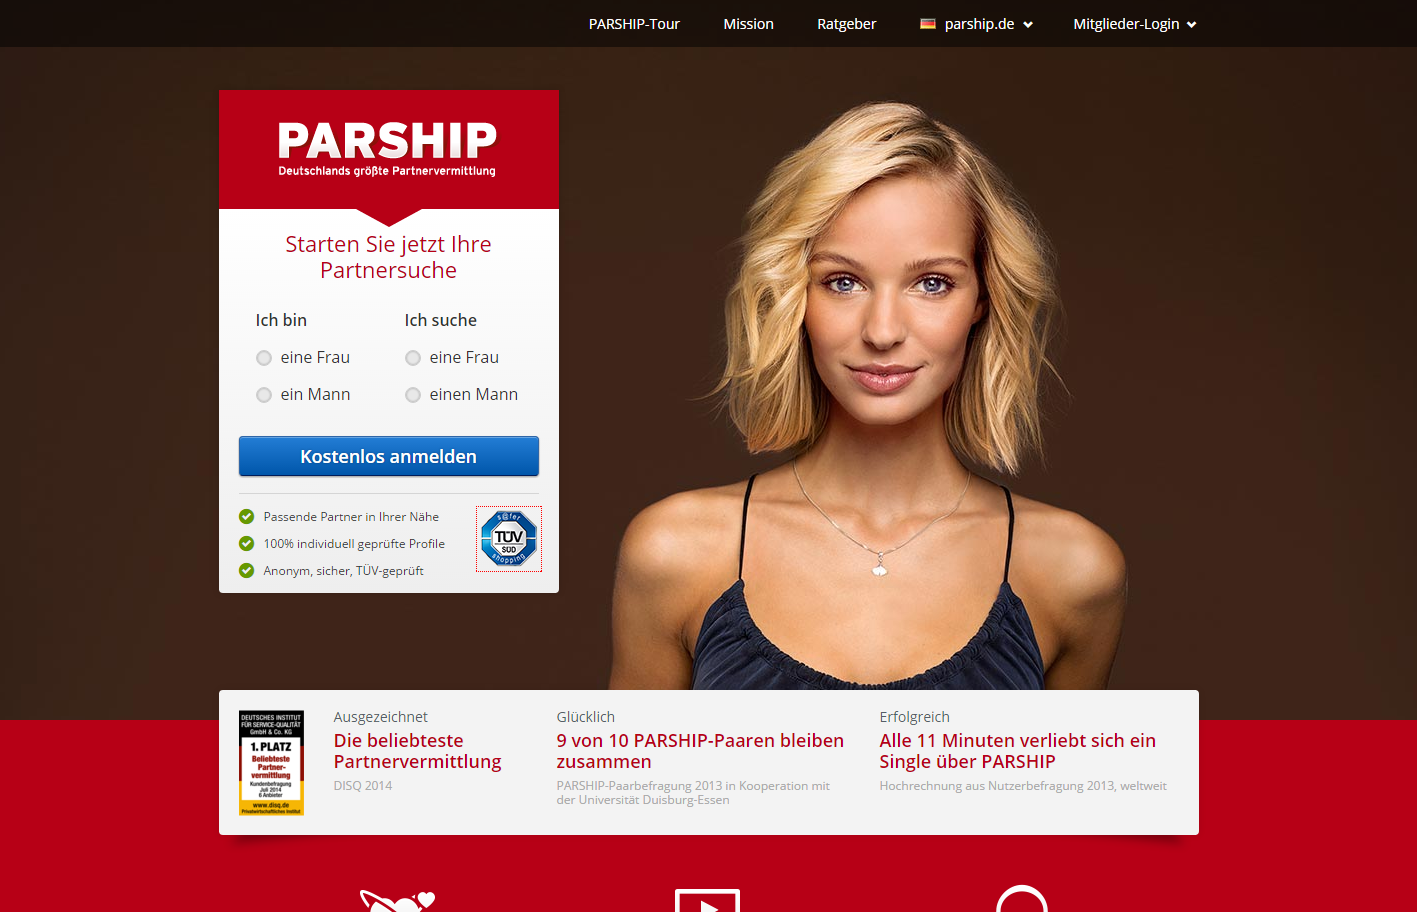 Blond parship model PARSHIP GROUP